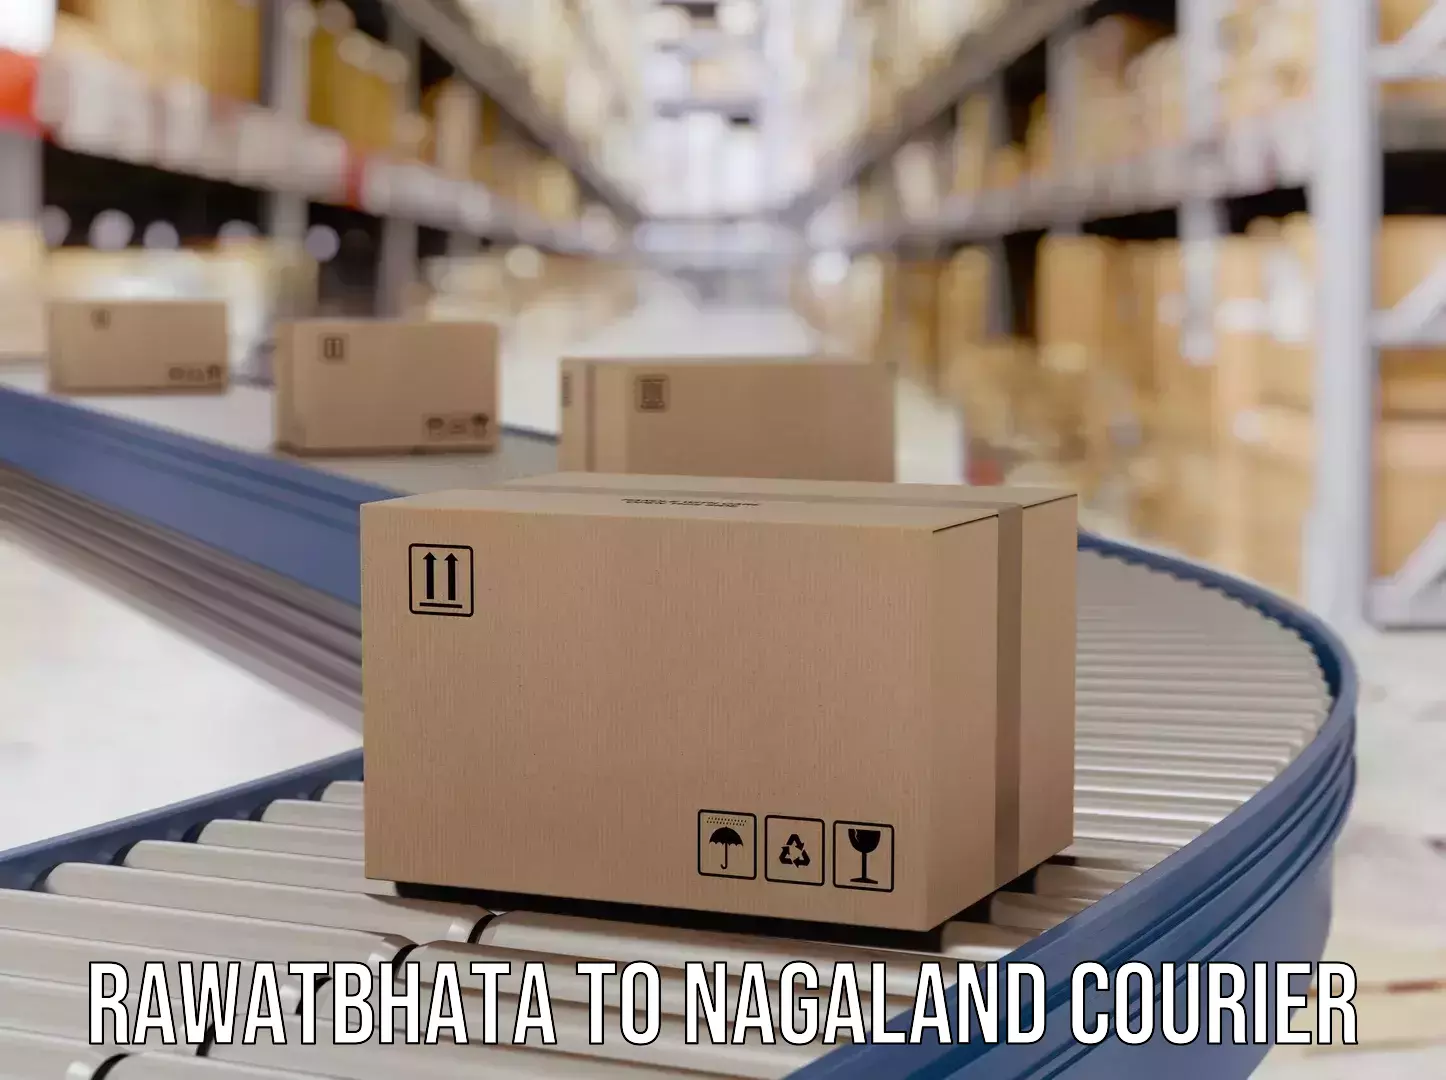 Courier service comparison Rawatbhata to Nagaland